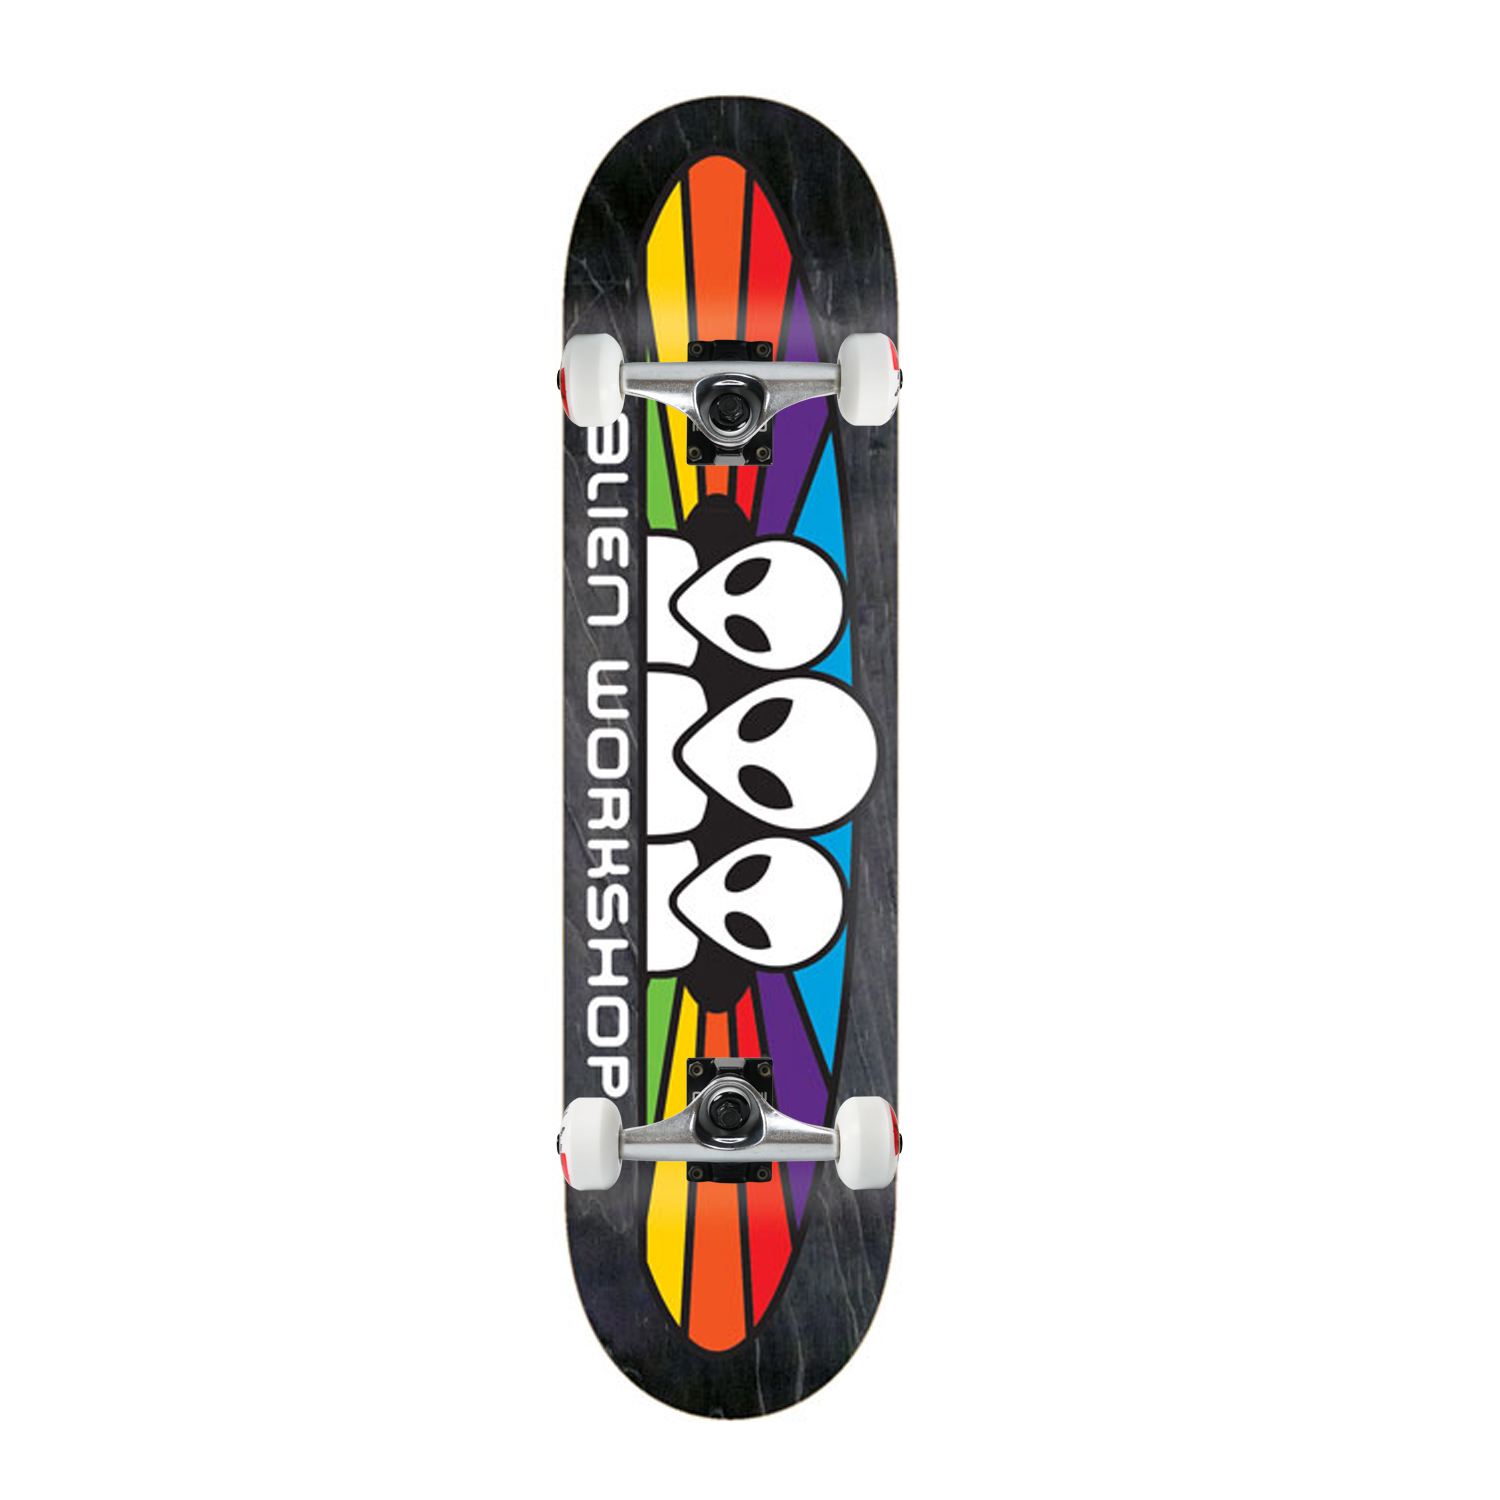 Спектрум 7. Скейтборд Enjoi Spectrum Black 7.875. Alien Workshop Skateboards. Скейтборд Blast plane 7.875. DGK Skateboard Deck.